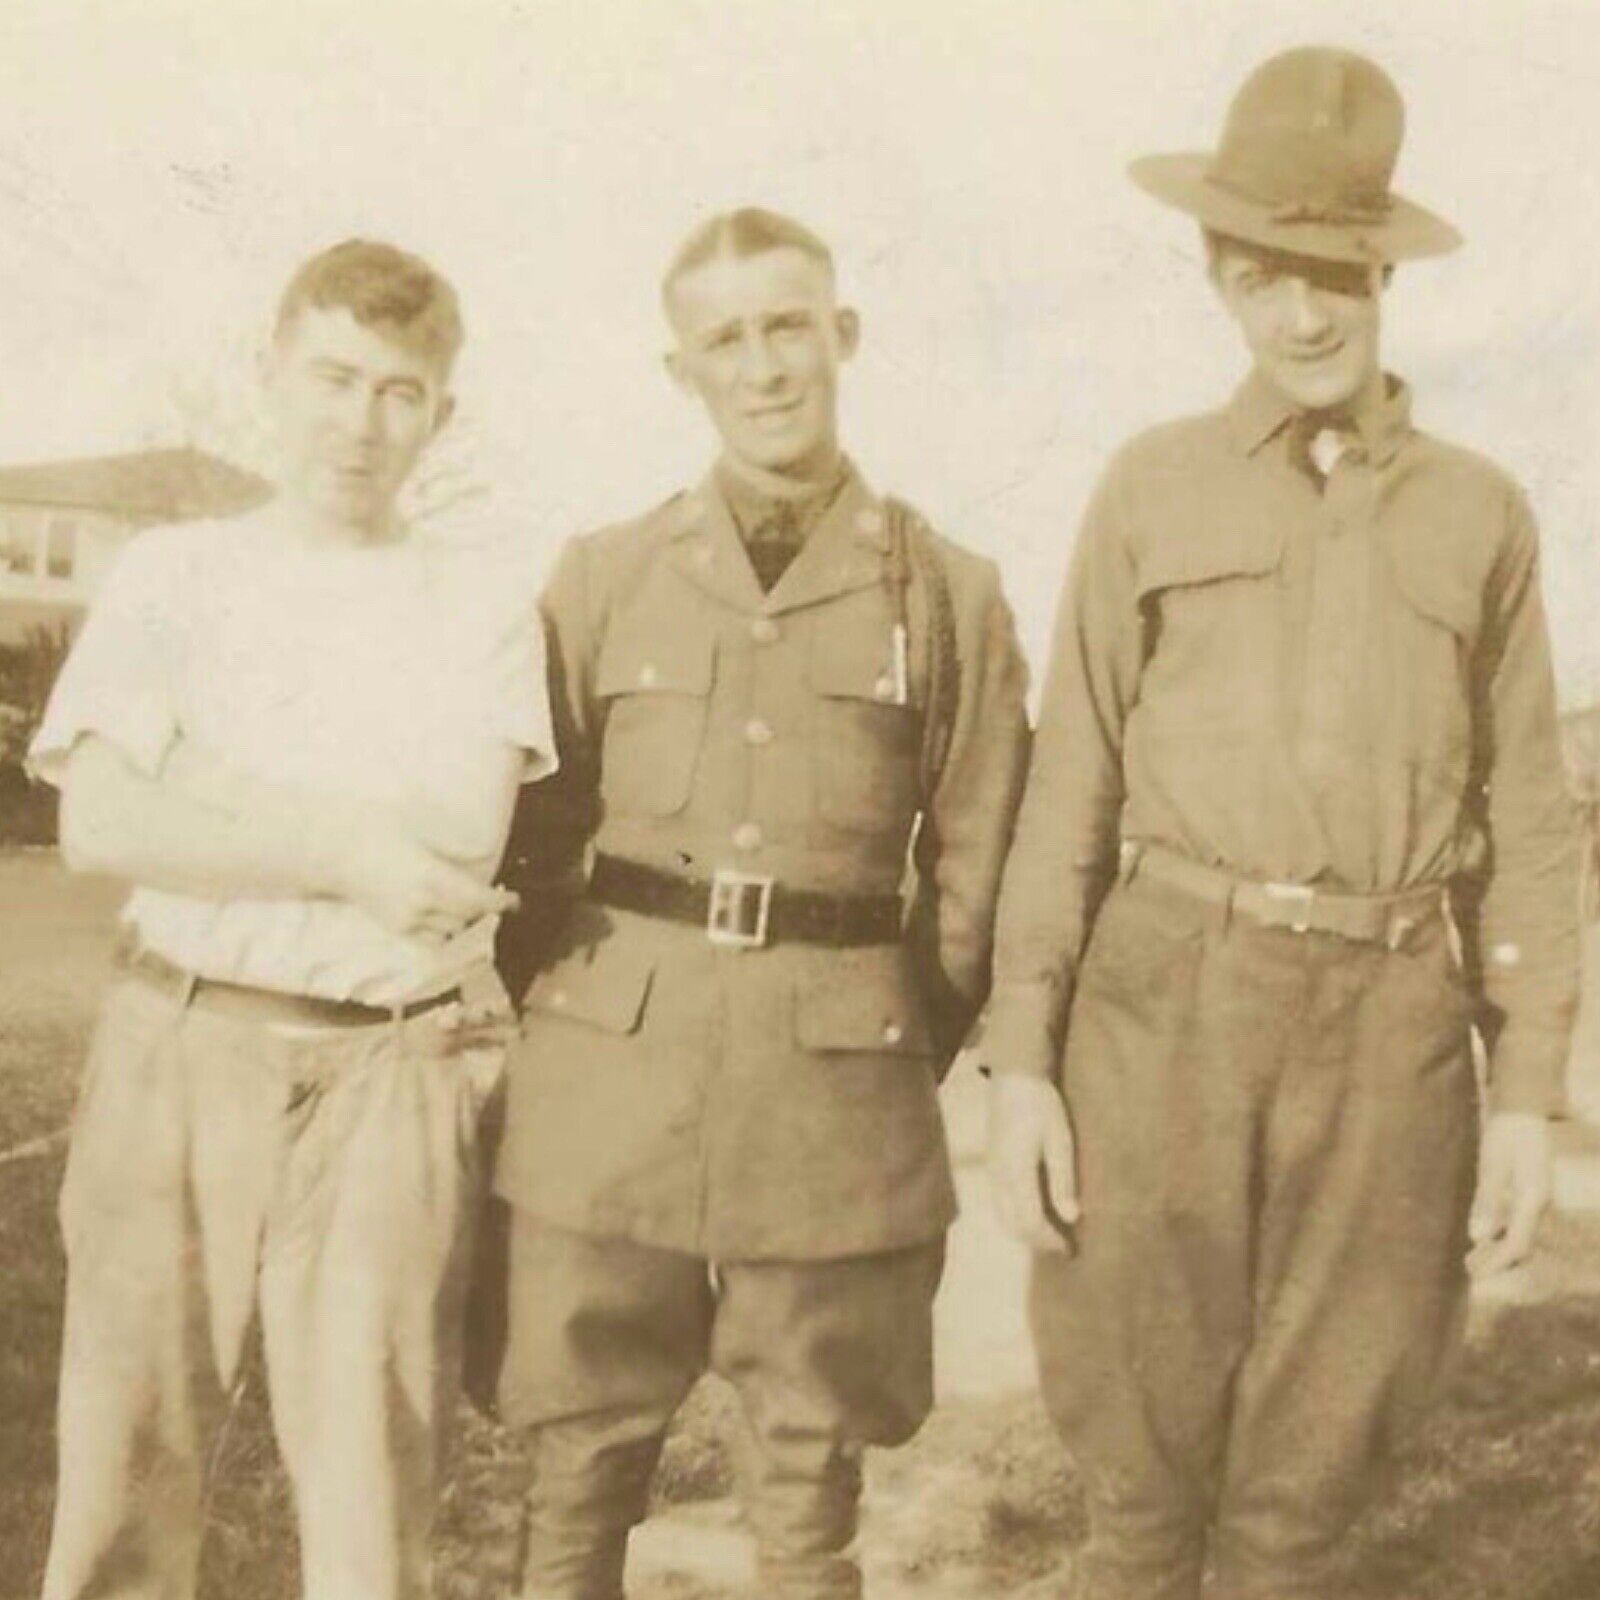 Antique Snapshot Photo Three Handsome Men Wearing Military Uniforms